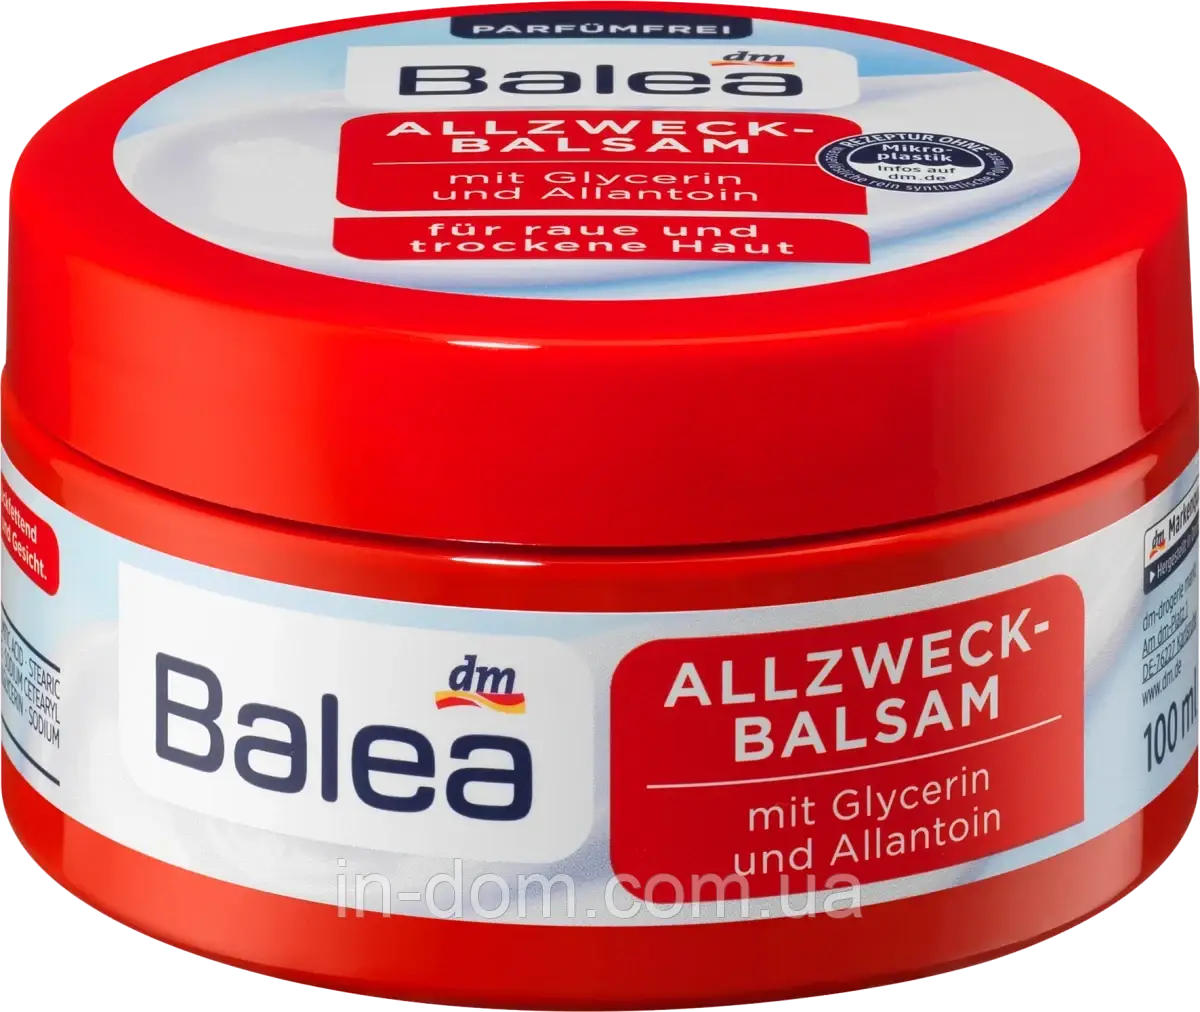 Balea Allzweckbalsam mit Glycerin und Allantoin Універсальний бальзам з гліцерином та алантоїном 100 мл